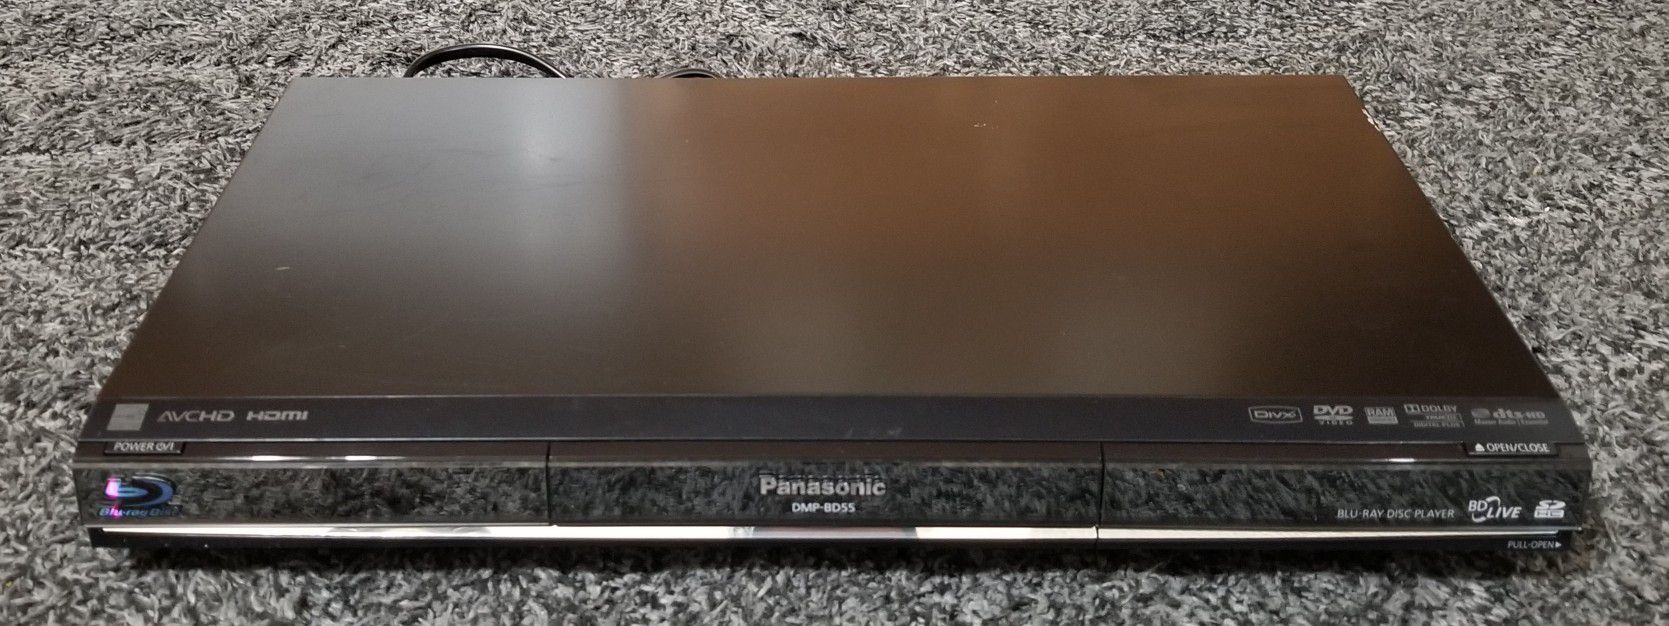 Panasonic DMP-BD55 Blu-ray Player